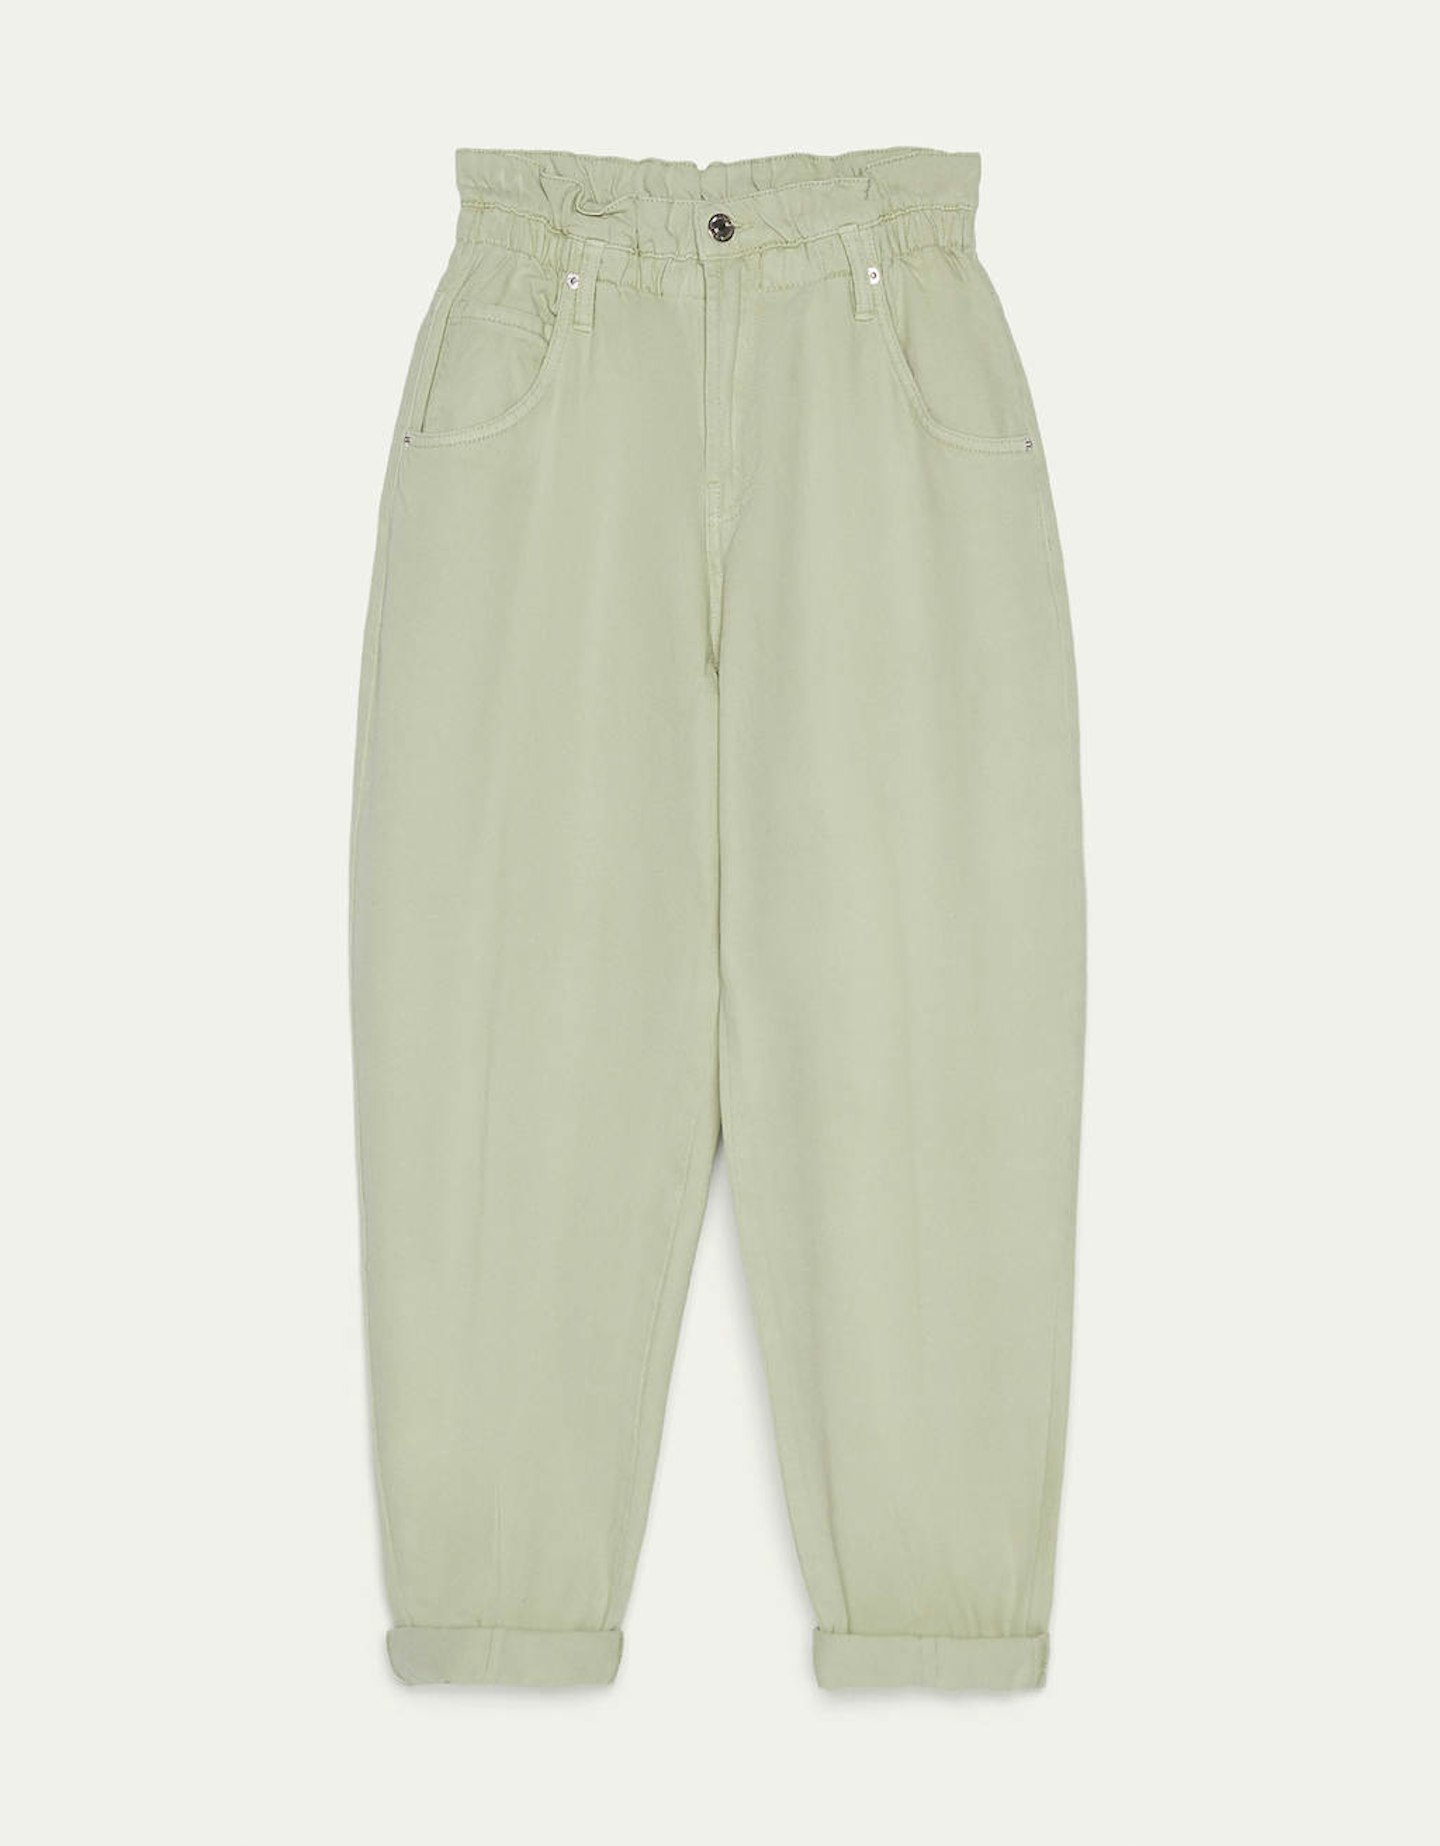 Bershka, Slouchy Trousers, £22.99